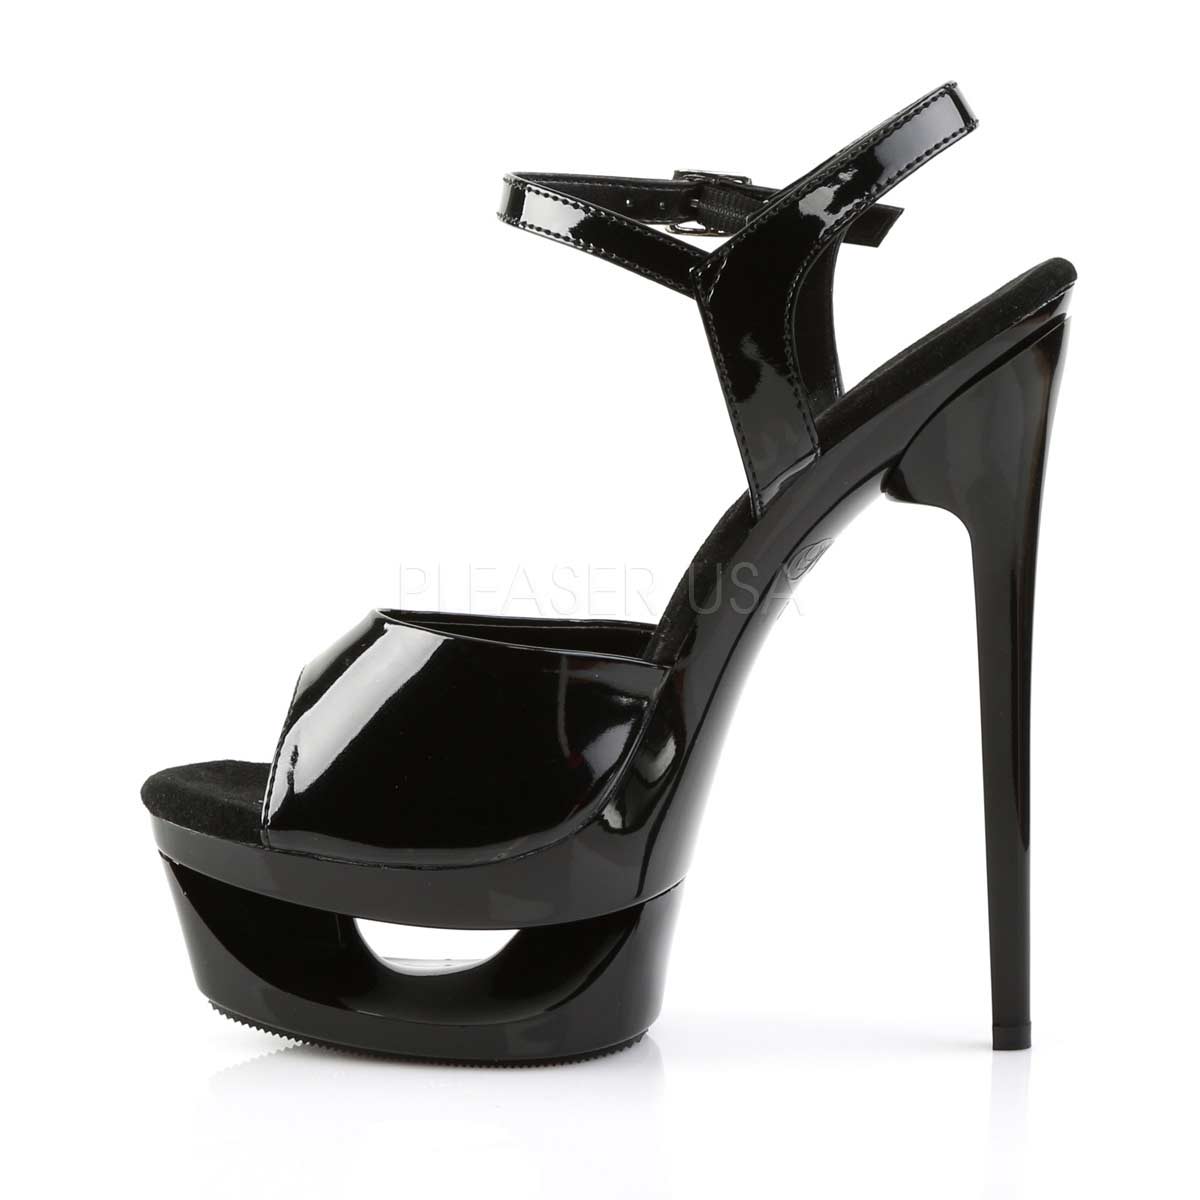 Pleaser Eclipse-609 - Black Pat in Sexy Heels & Platforms - $57.95